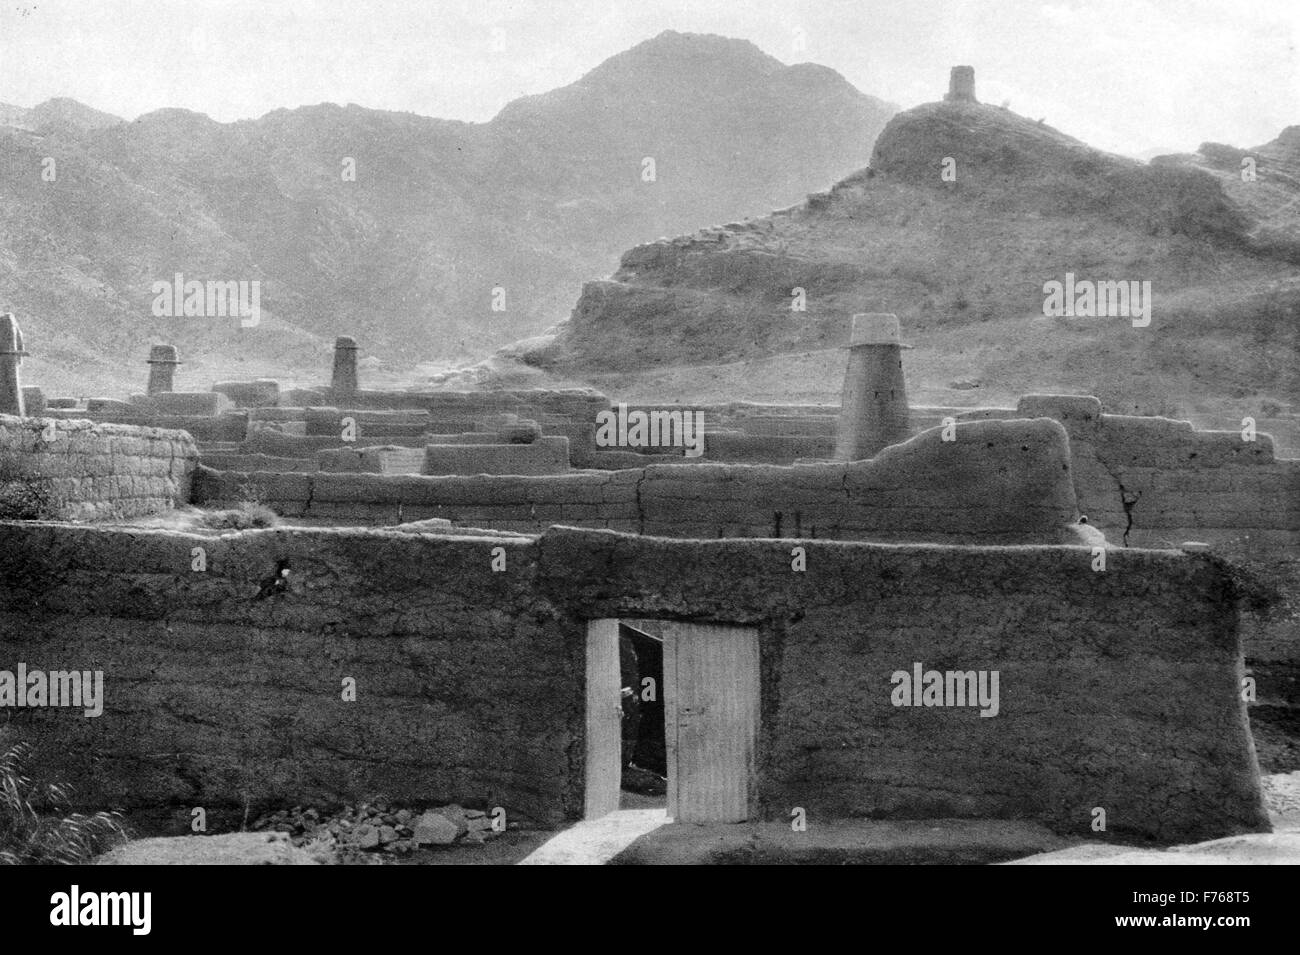 Khyber Pass, provincia di Pakhtunkhwa, Landi Kotal, Pakistan, Jamrud, Peshawar, Afghanistan, montagne Spin Ghar, vecchia immagine del 1900 Foto Stock